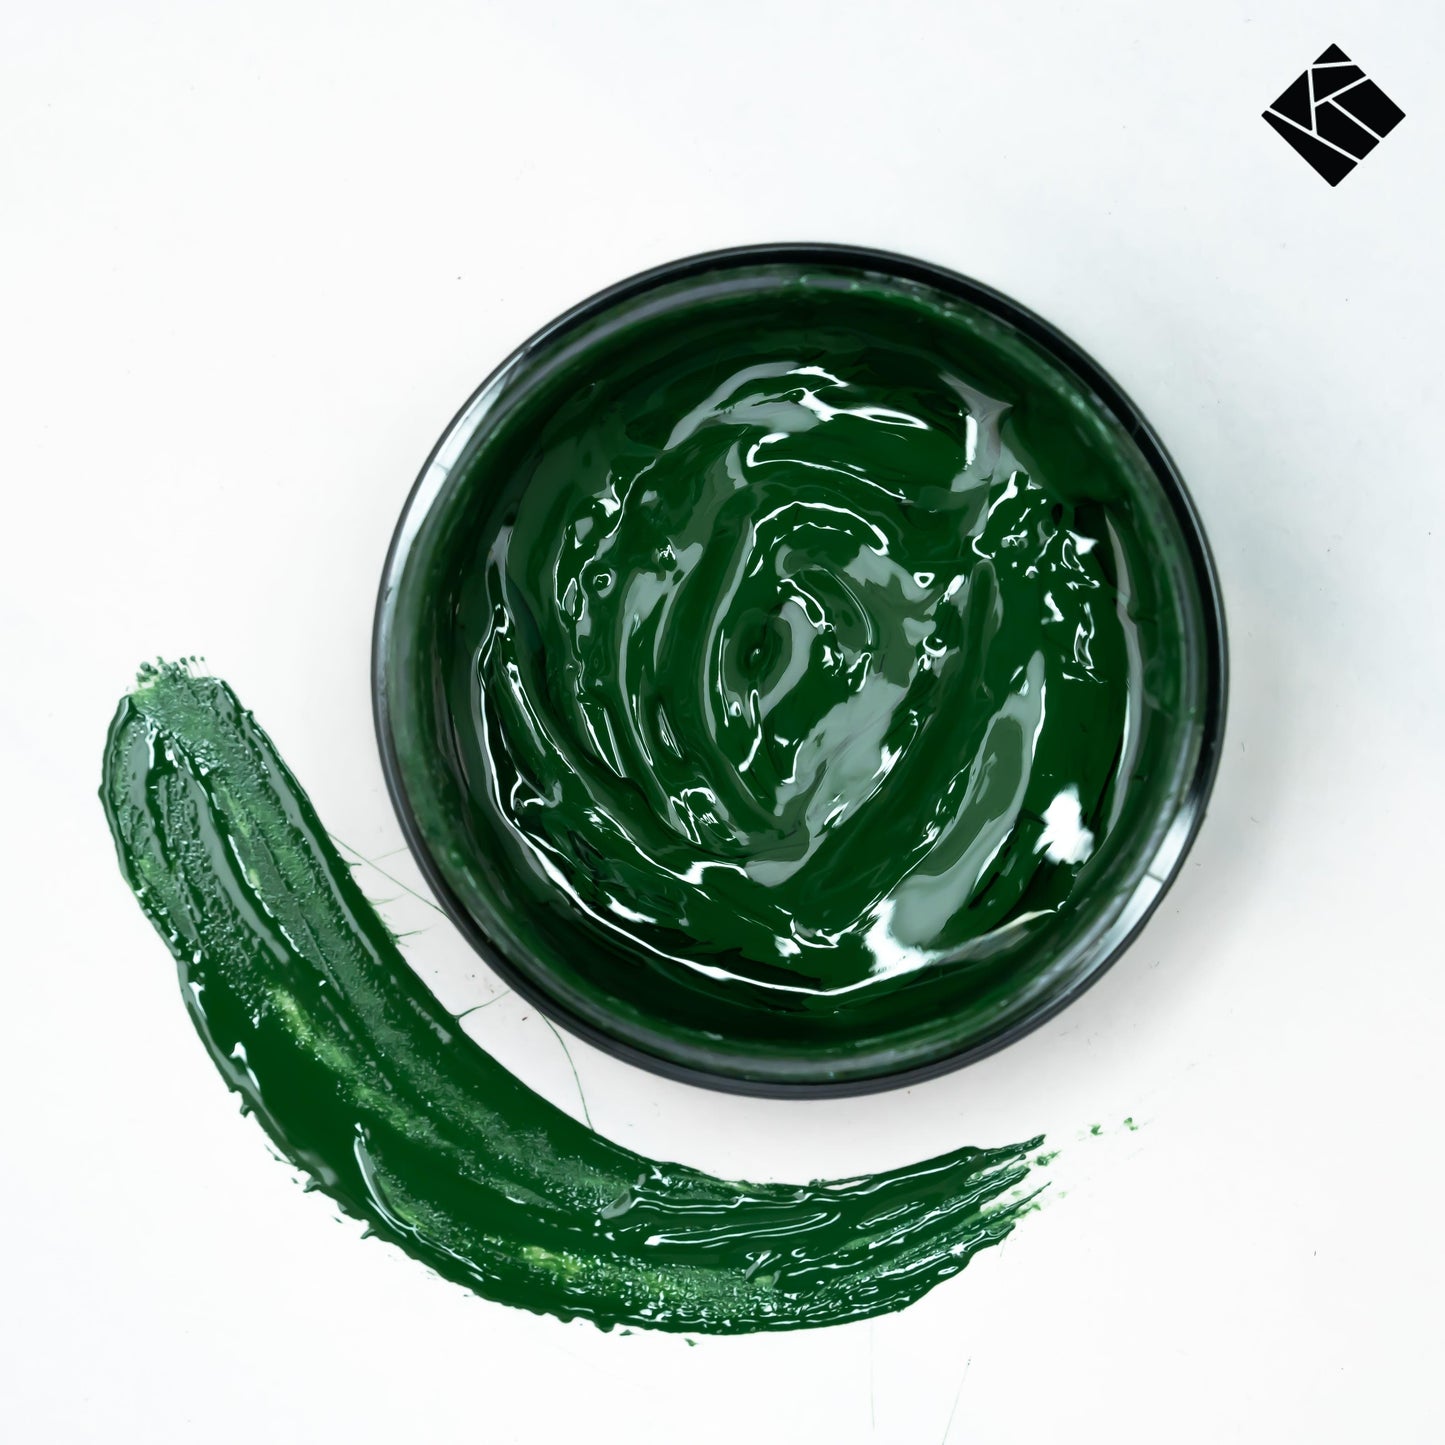 Hyderabad Green Premium Pigment -50 Grams | Suitable for Resin Epoxy Art - fenkraft art resin